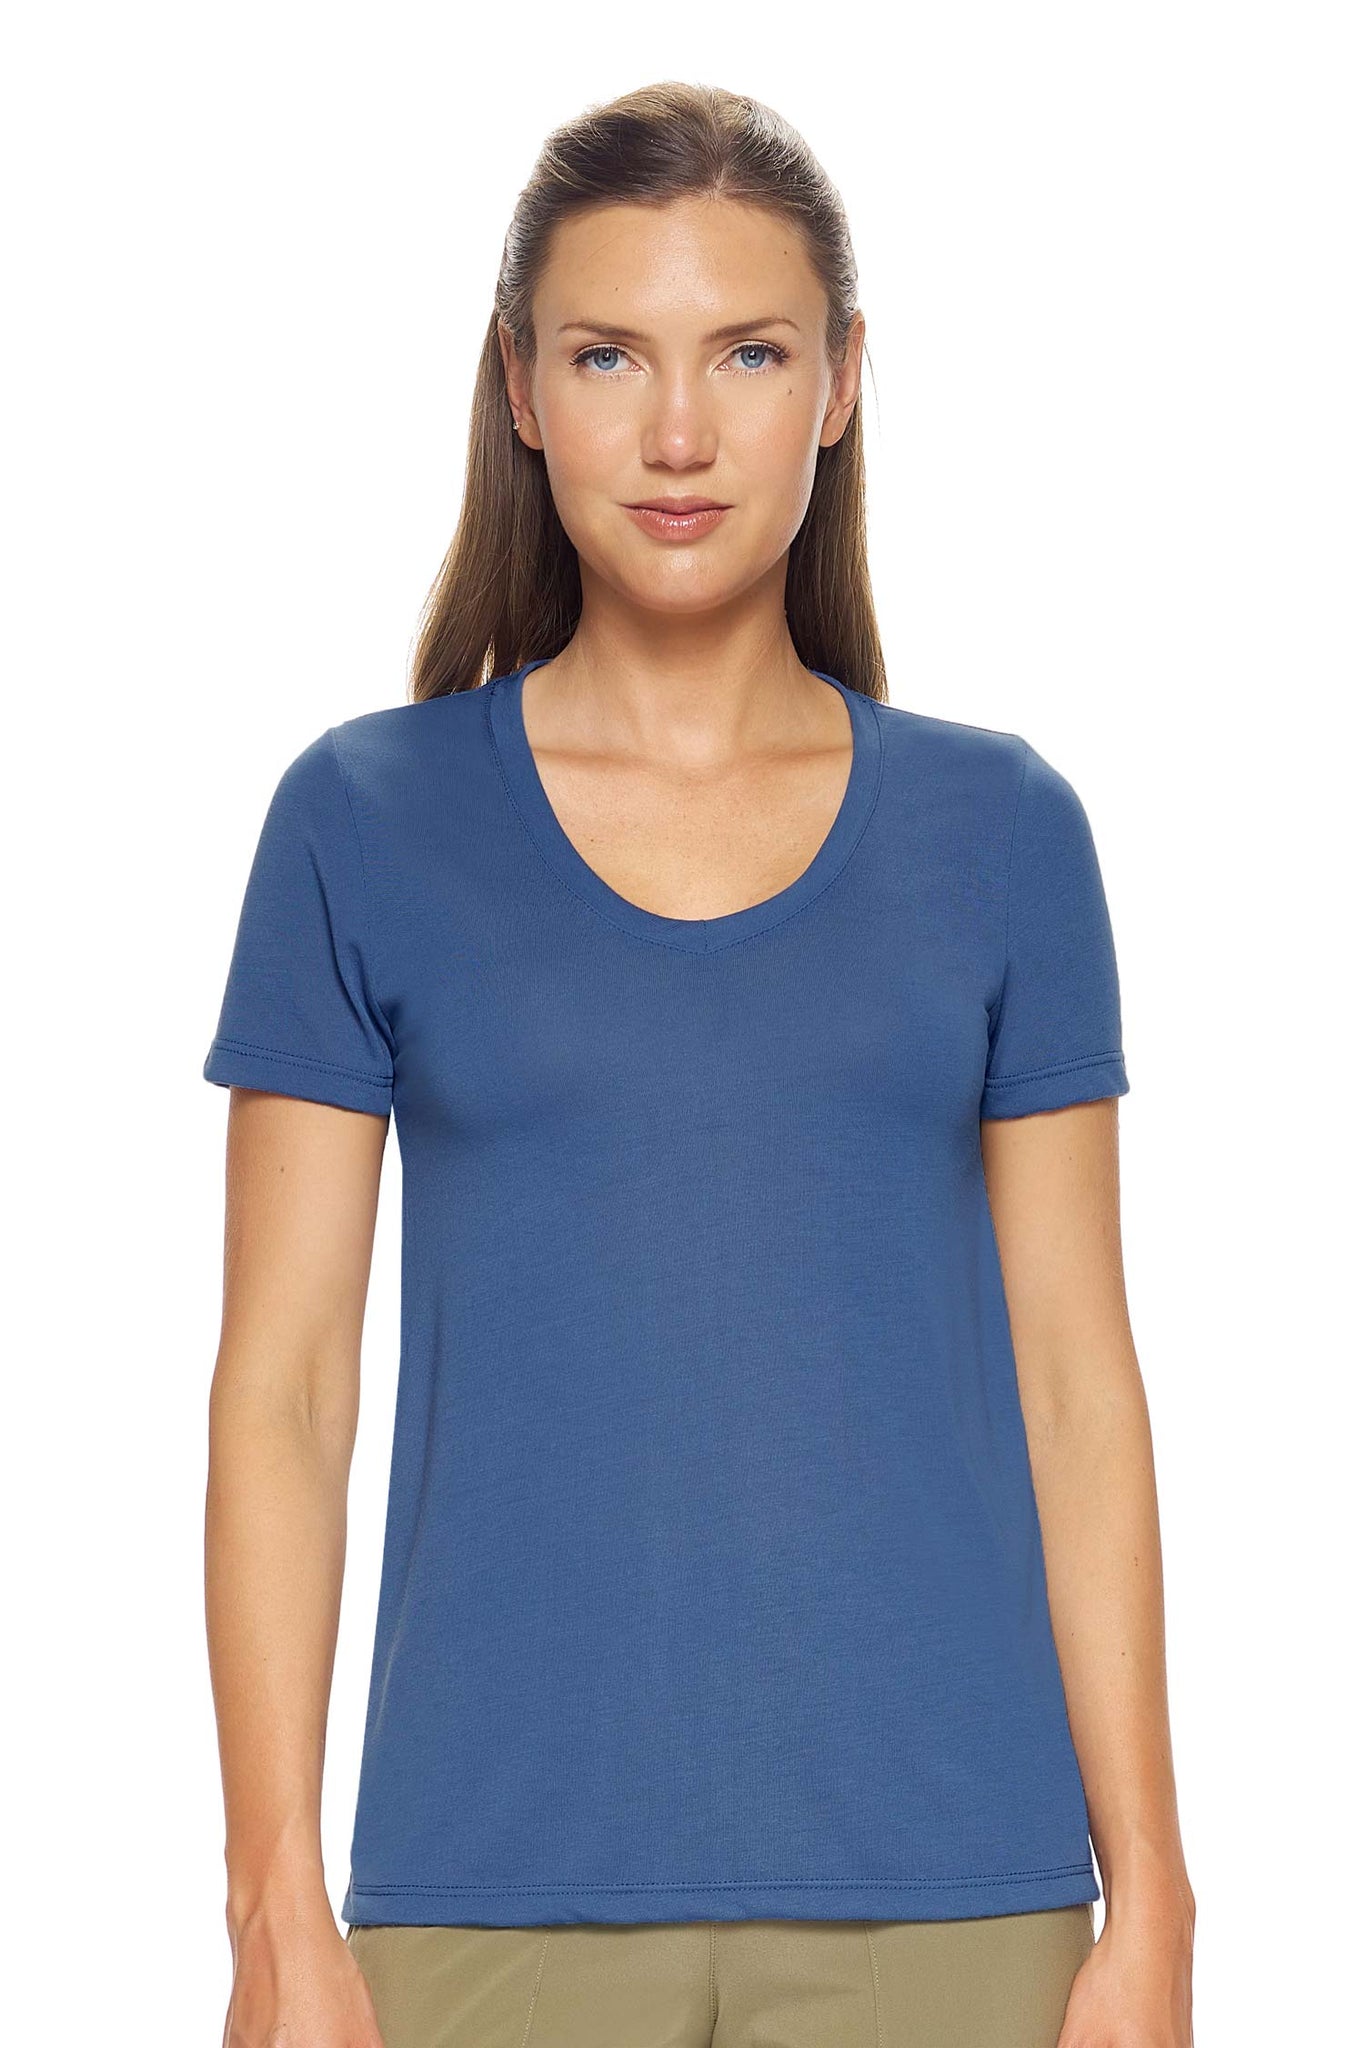 Expert Brand Wholesale Women's Siro V Neck Shirt Made in USA BE202 Stone Blue#stone-blue